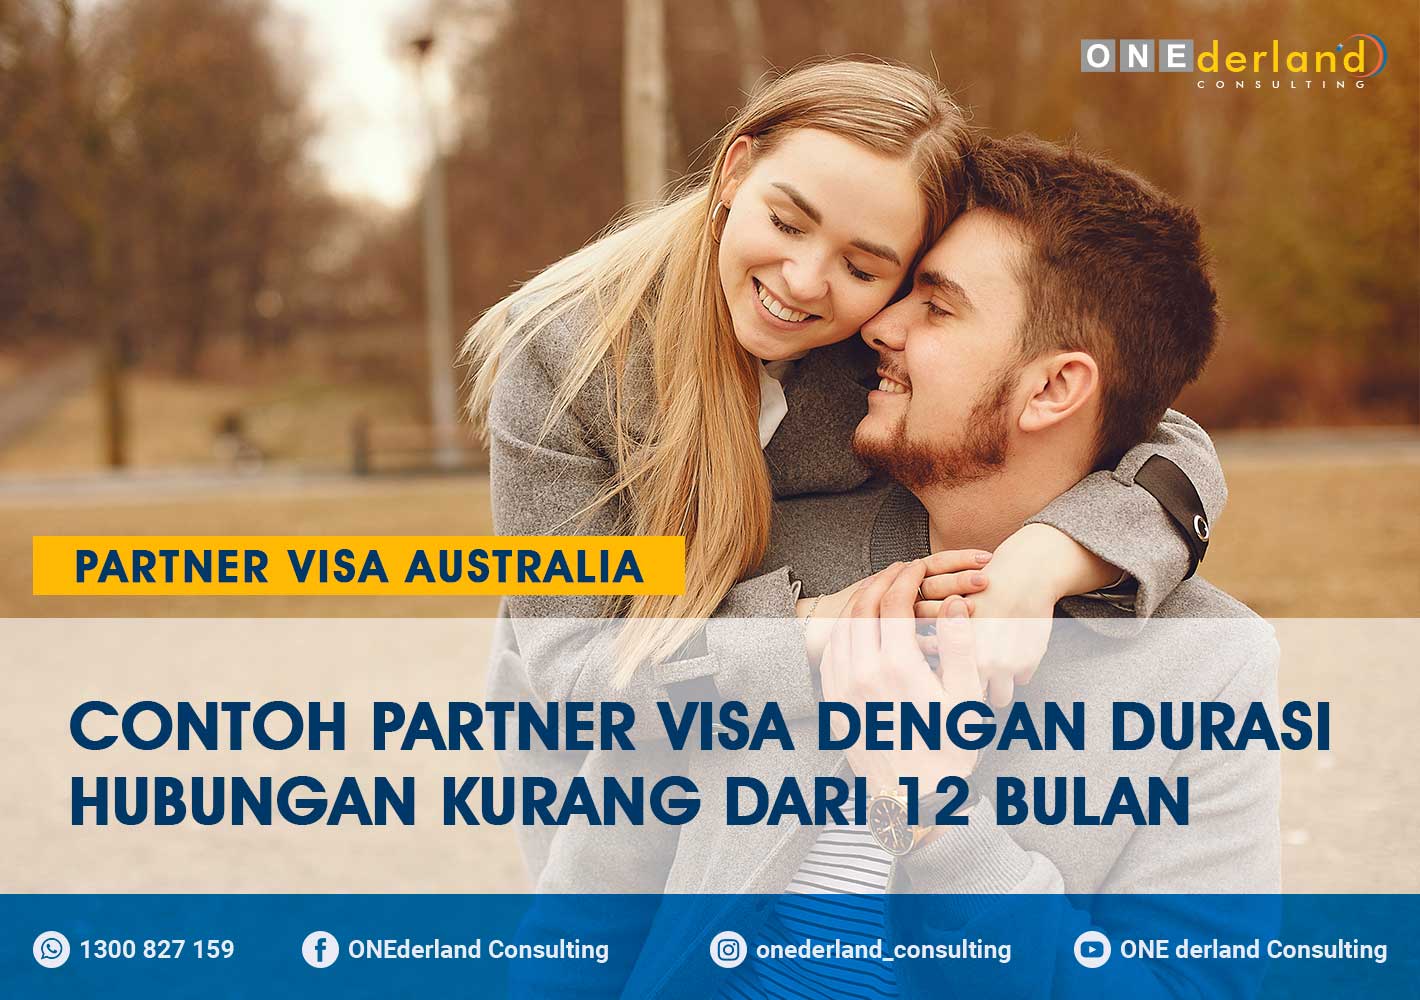 Contoh Partner Visa dengan Durasi Hubungan Kurang dari 12 Bulan